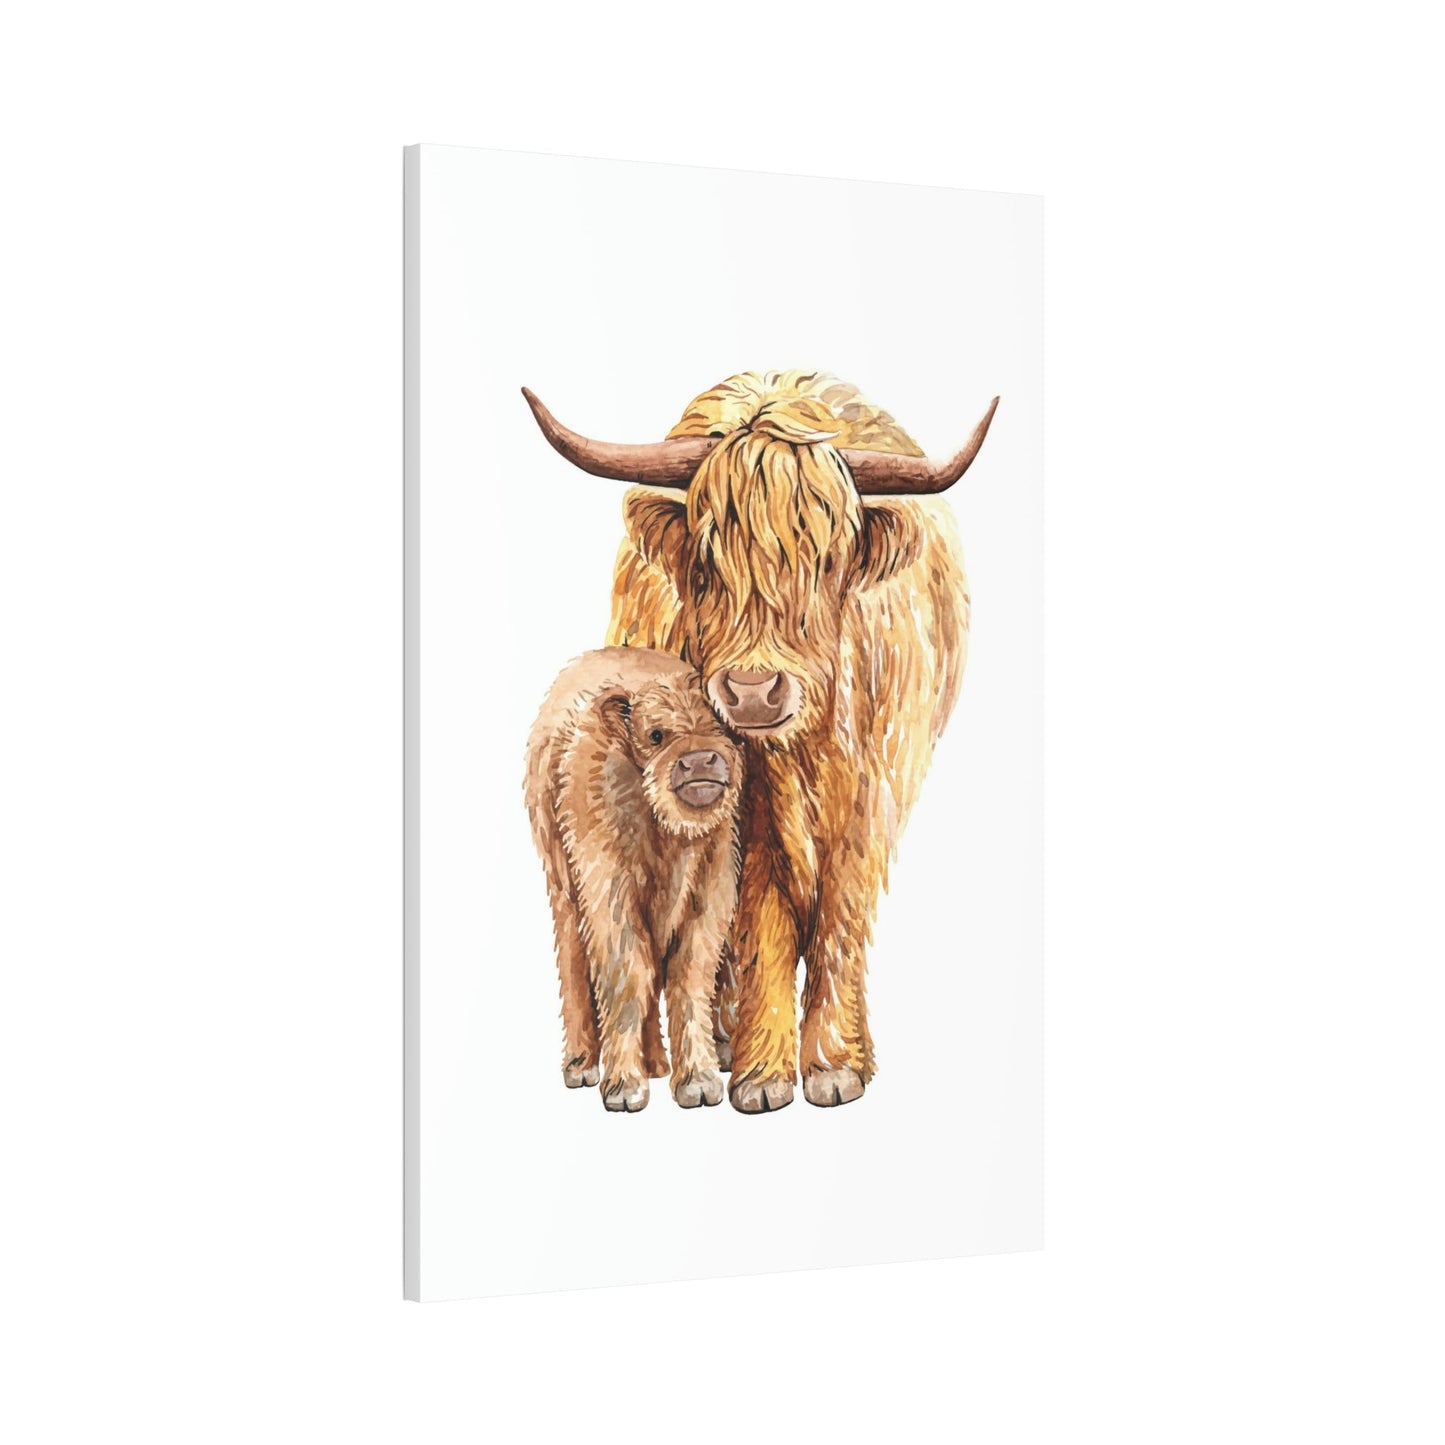 Maternal Love: Heartwarming Wall Art Depicting a Cow Mother and Calf